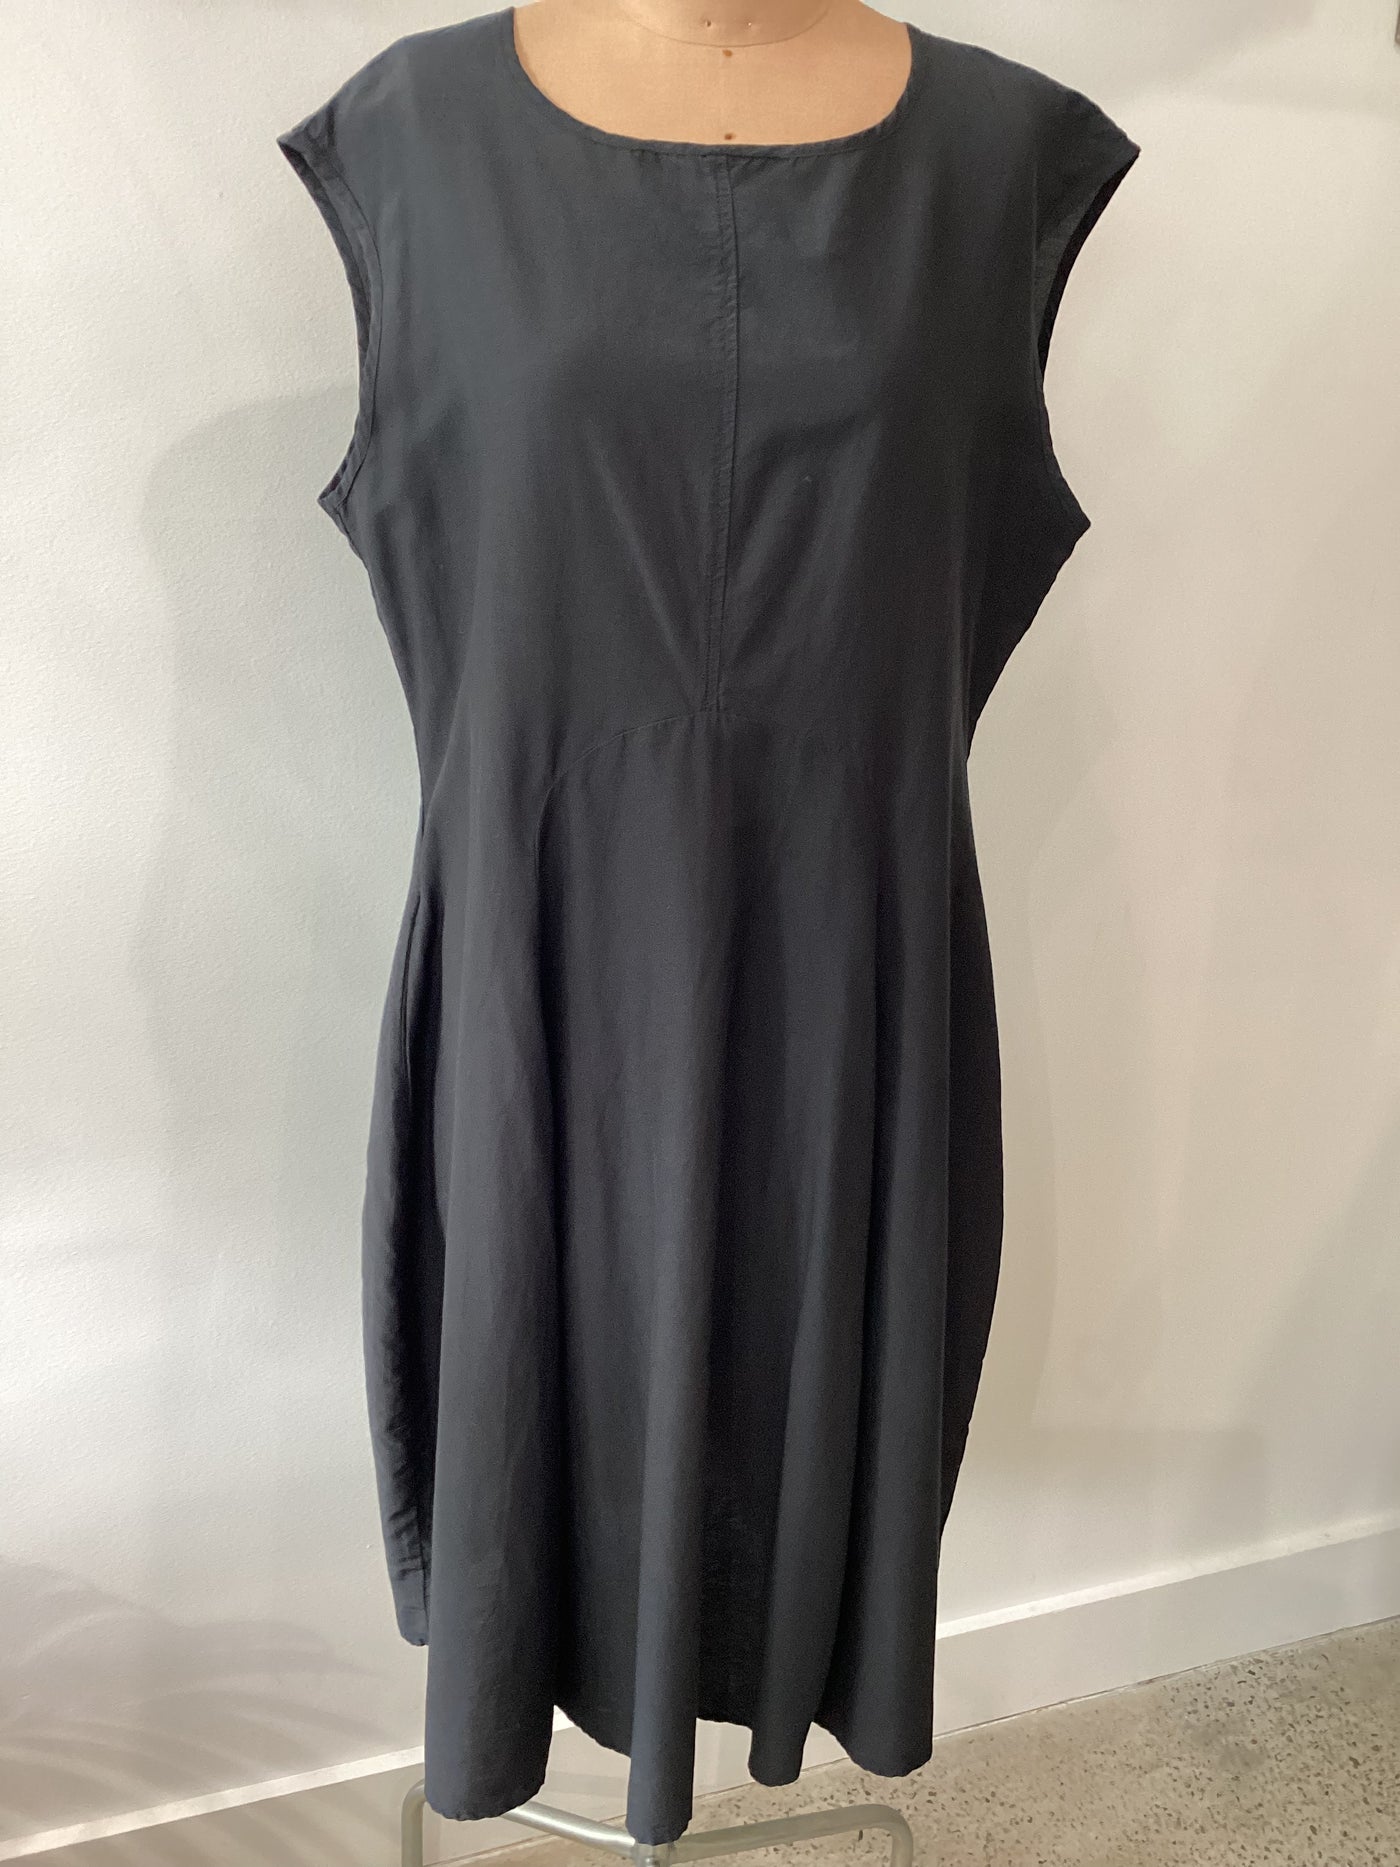 Valia - Claudette Dress. Black